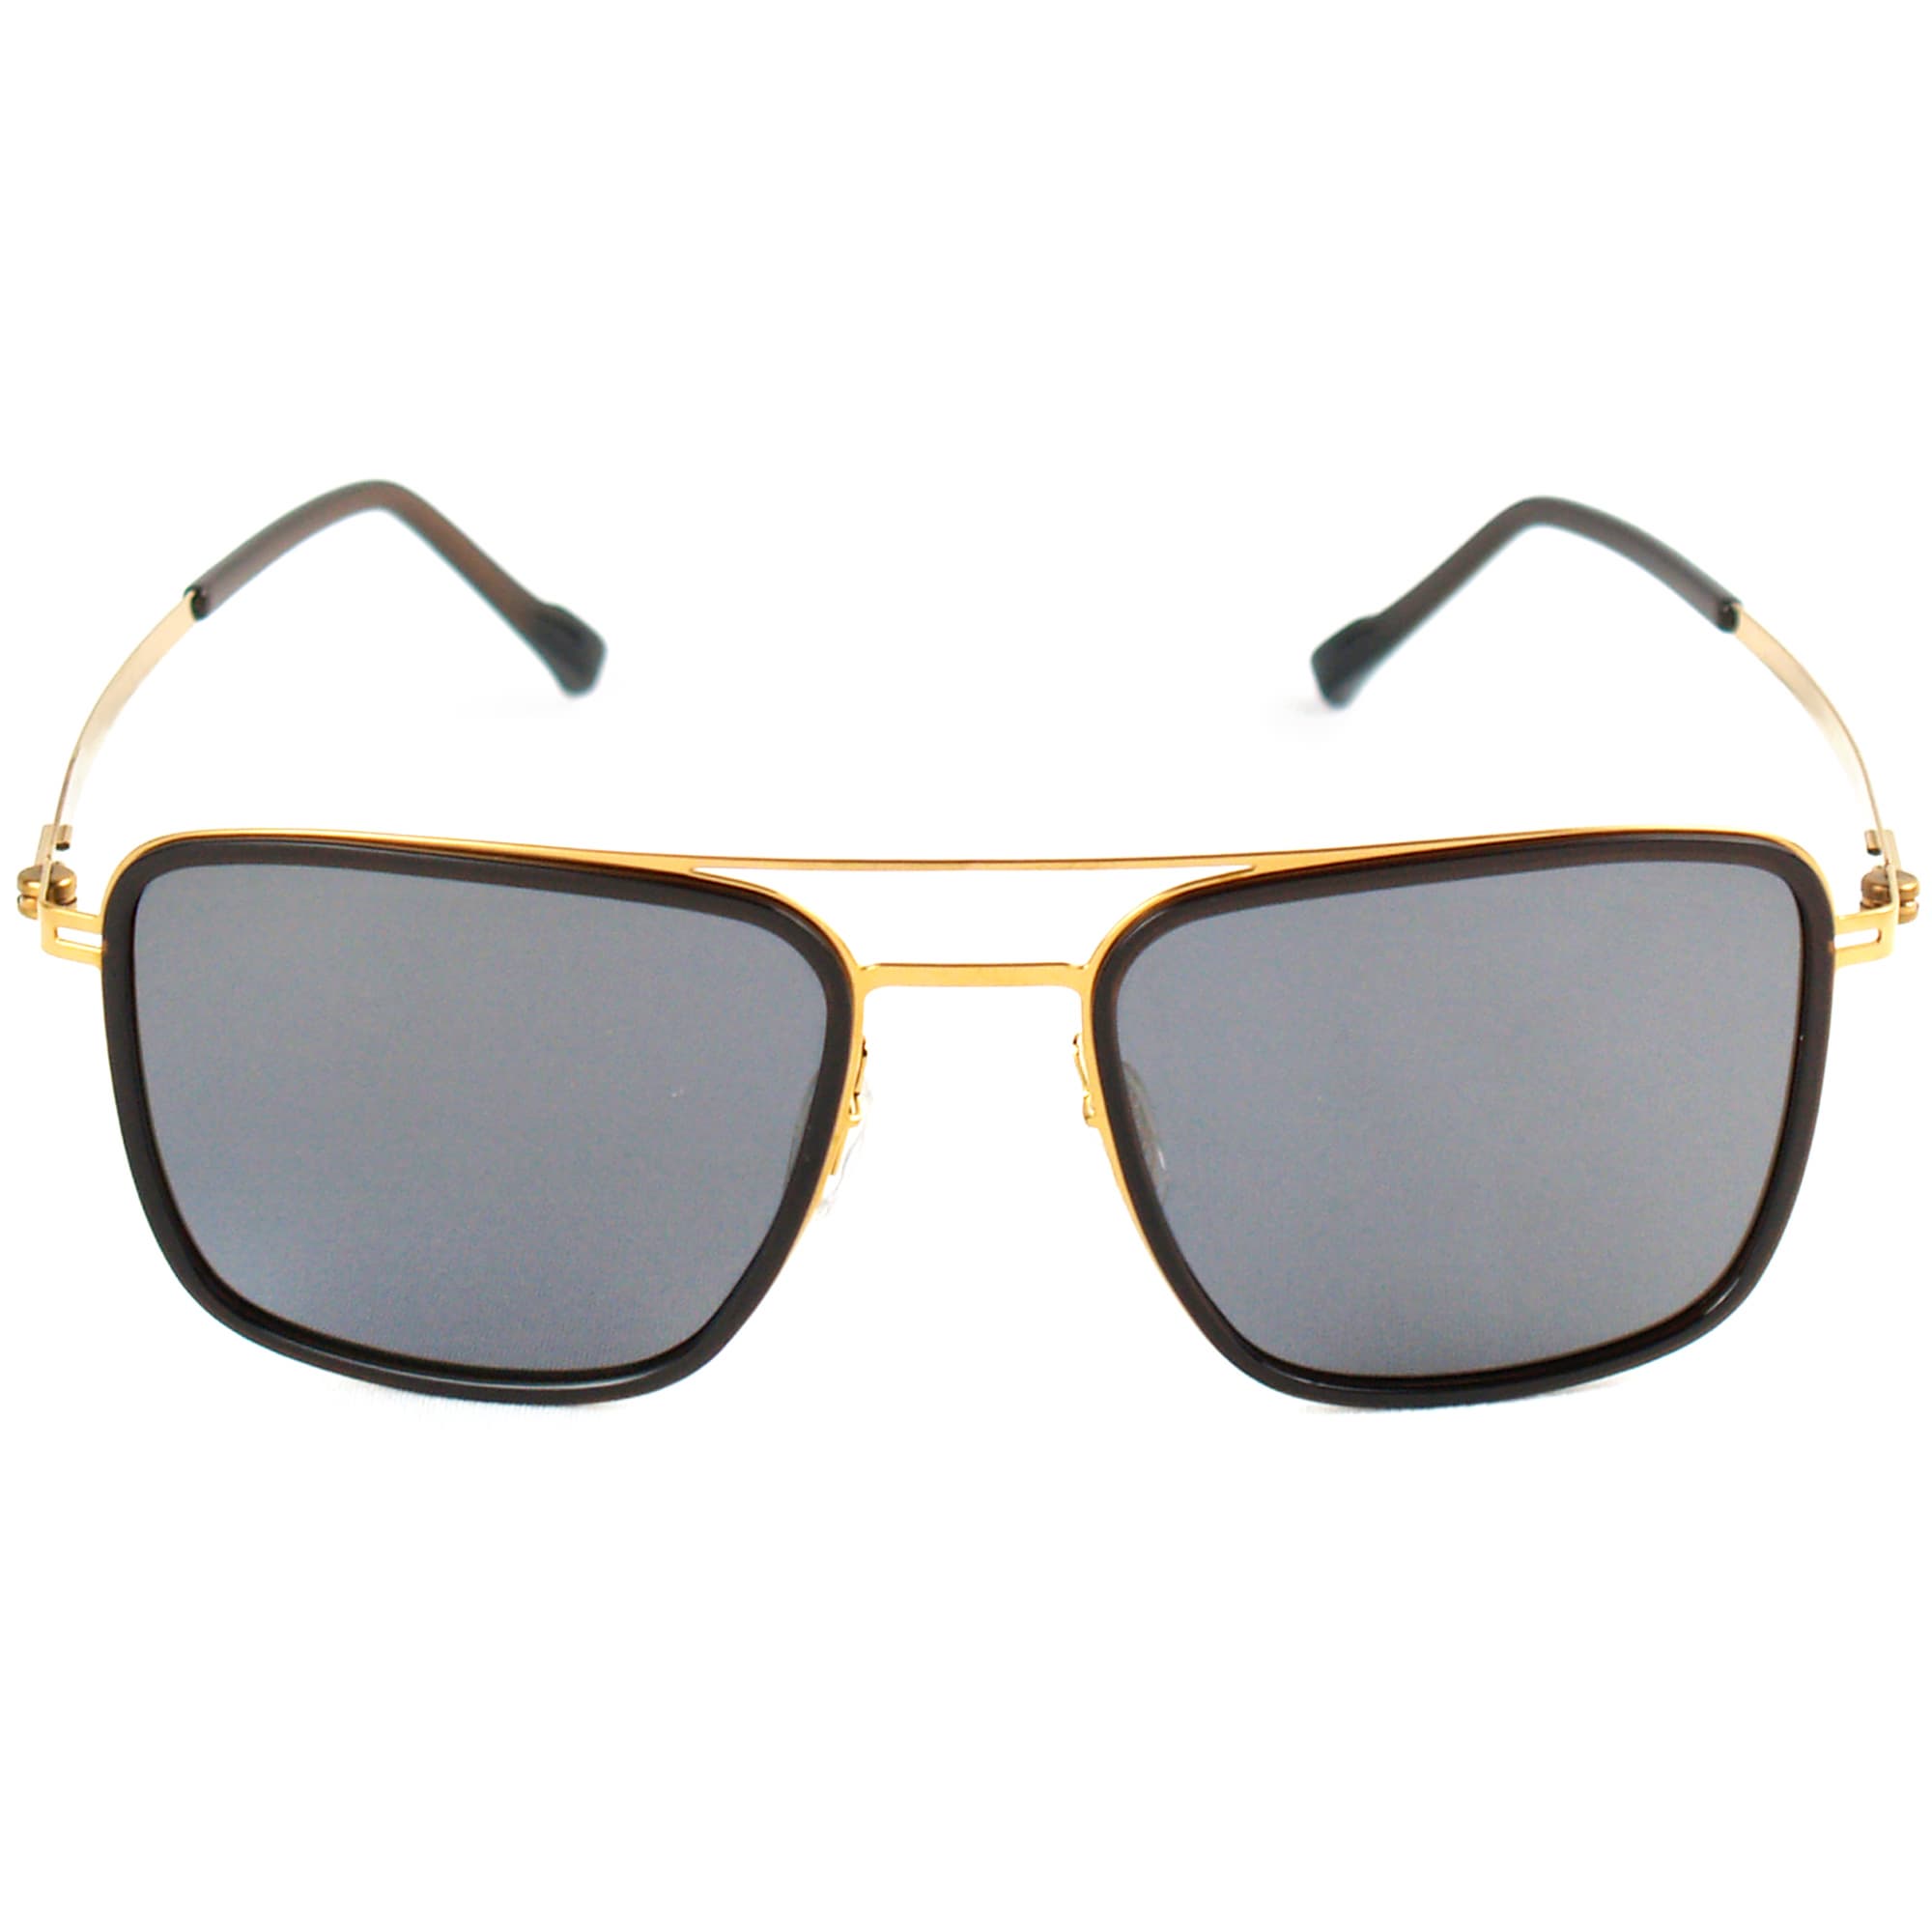 AviatorI  Acetate _ Thin Stainless Steel  Frame Sunglasses